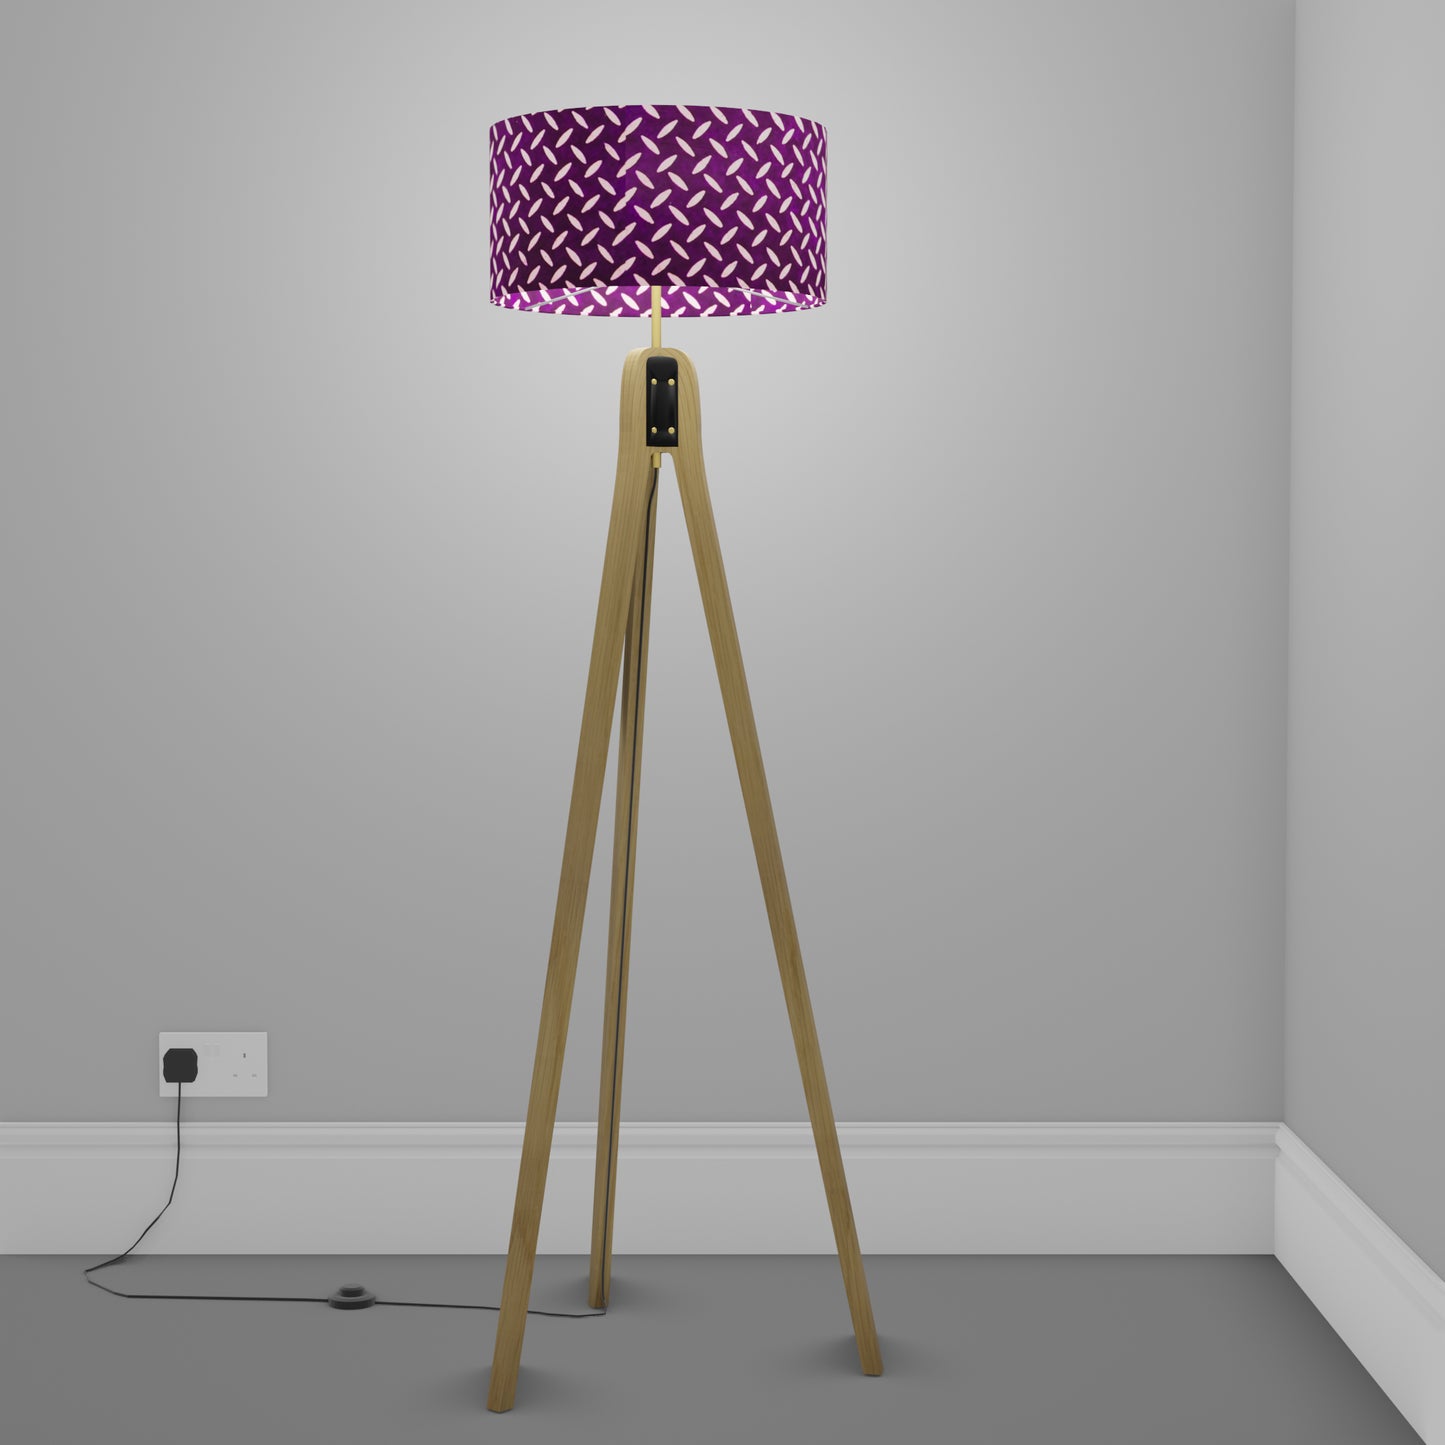 Oak Tripod Floor Lamp - P13 - Batik Tread Plate Purple